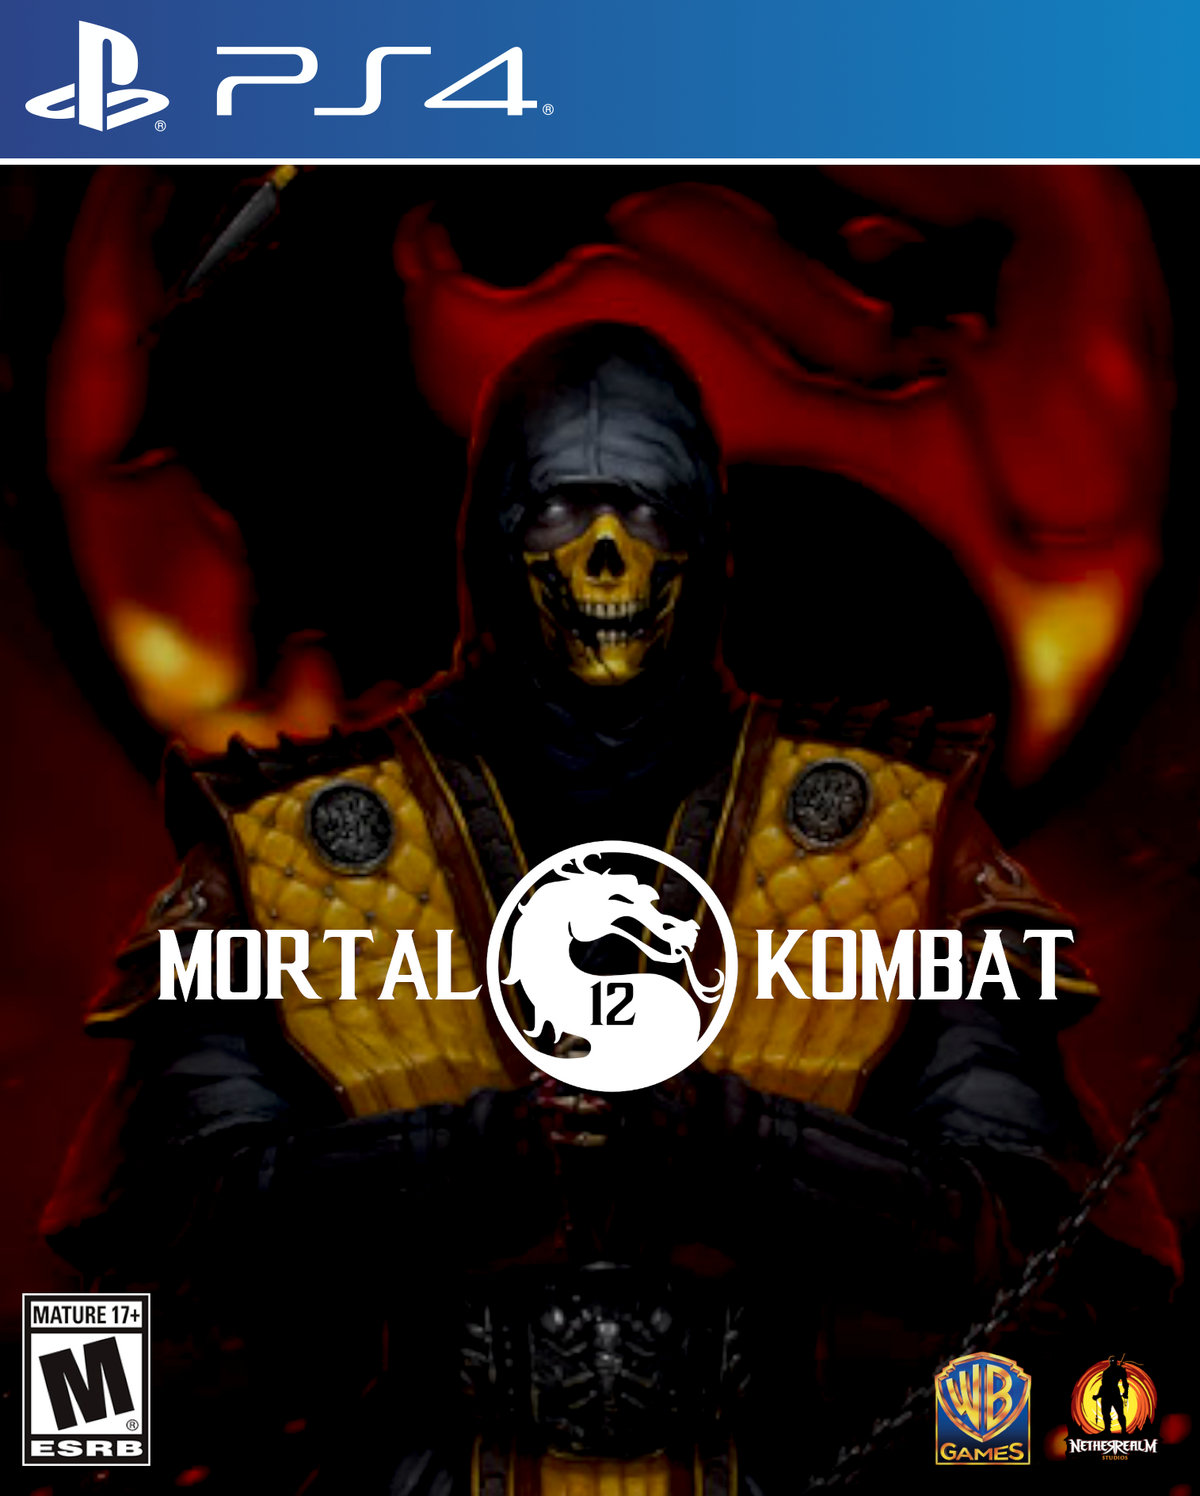 MK Deception all Fatalities : r/MortalKombat